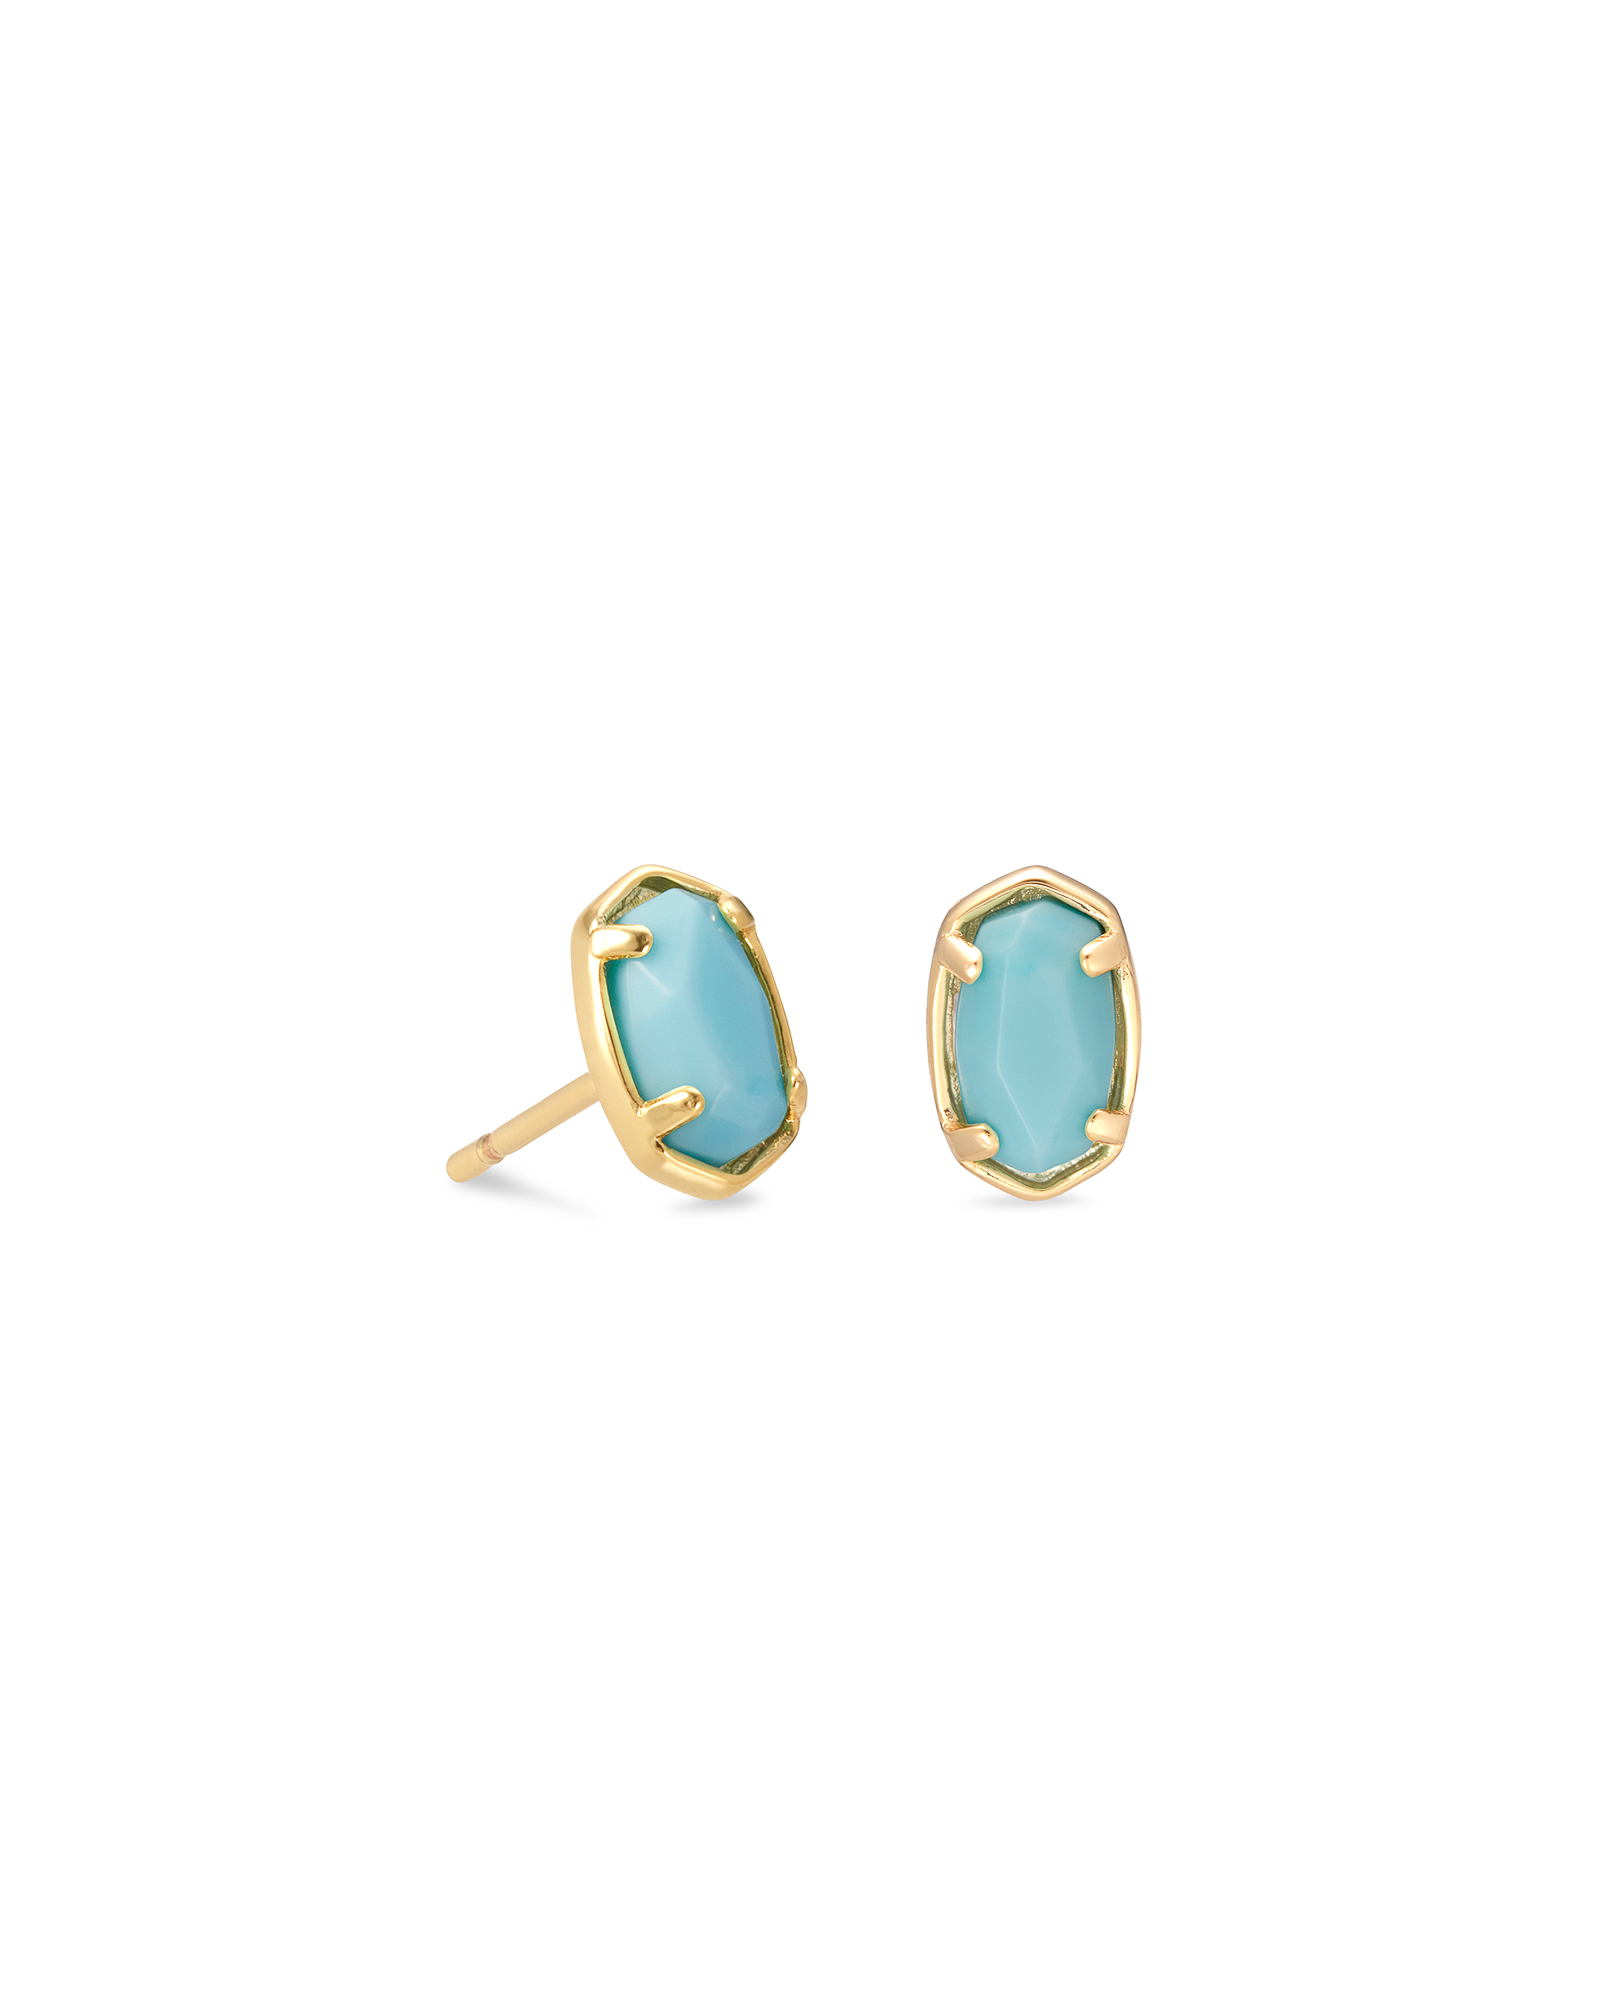 Kendra Scott Parsons Turquoise Earrings 001-705-38988 | Meigs Jewelry |  Tahlequah, OK